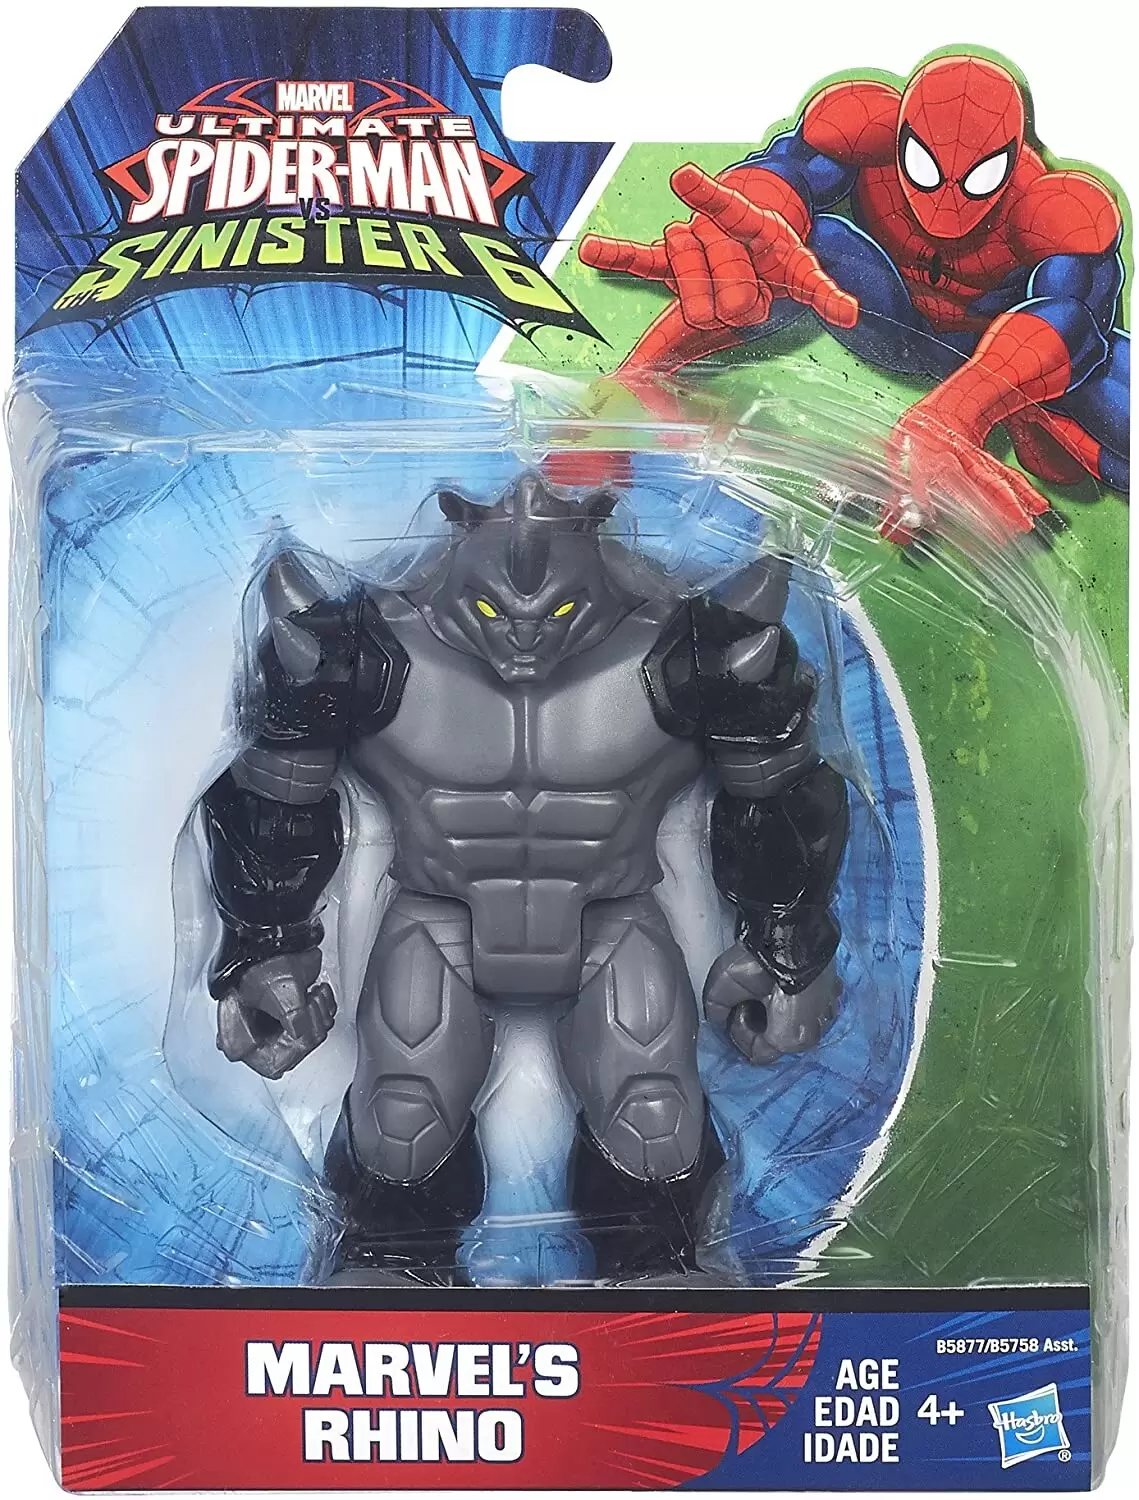 Rhino - figurine Ultimate Spider-Man Vs The Sinister 6